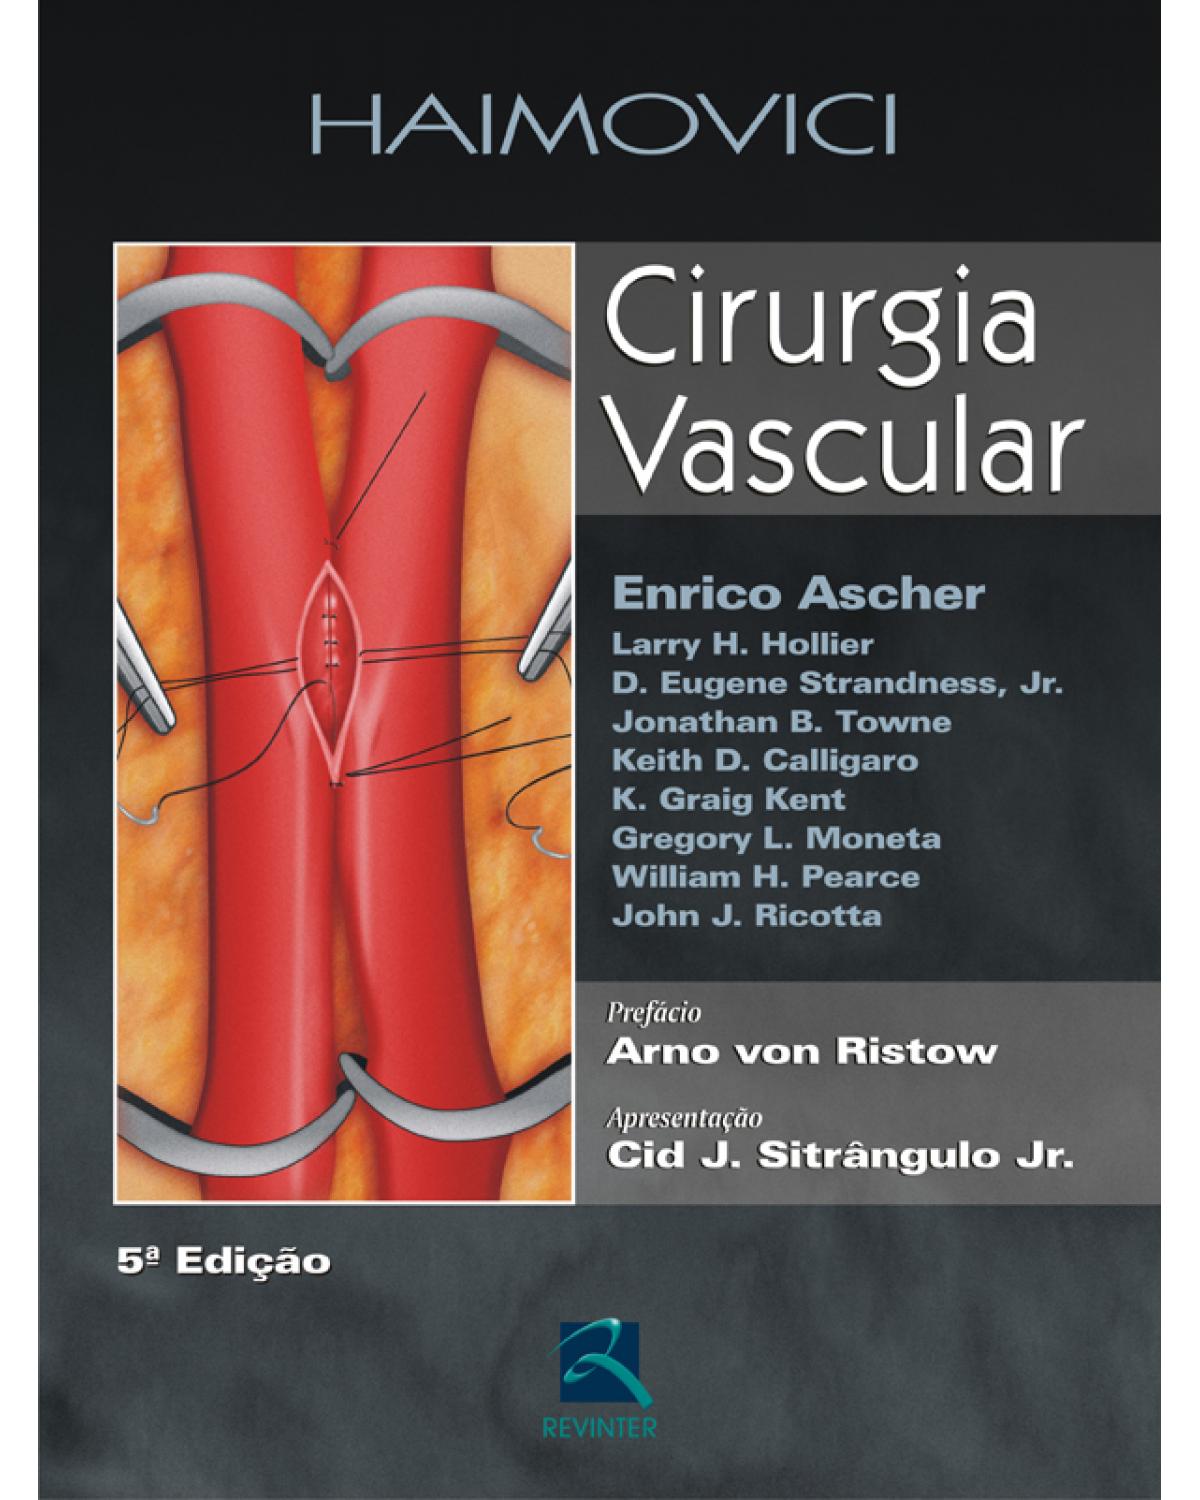 Haimovici - Cirurgia vascular - 5ª Edição | 2006